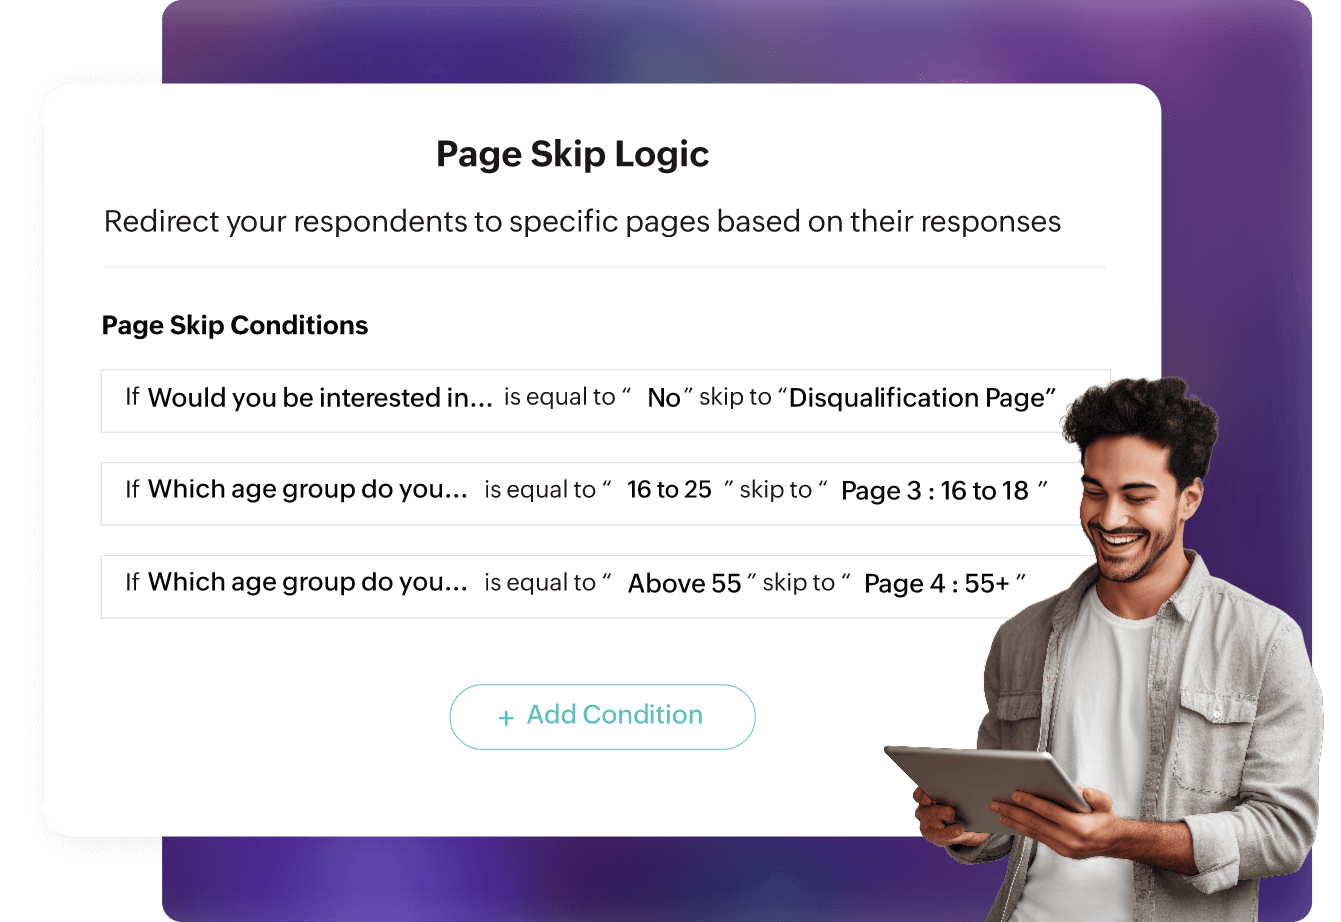 Page skip logic